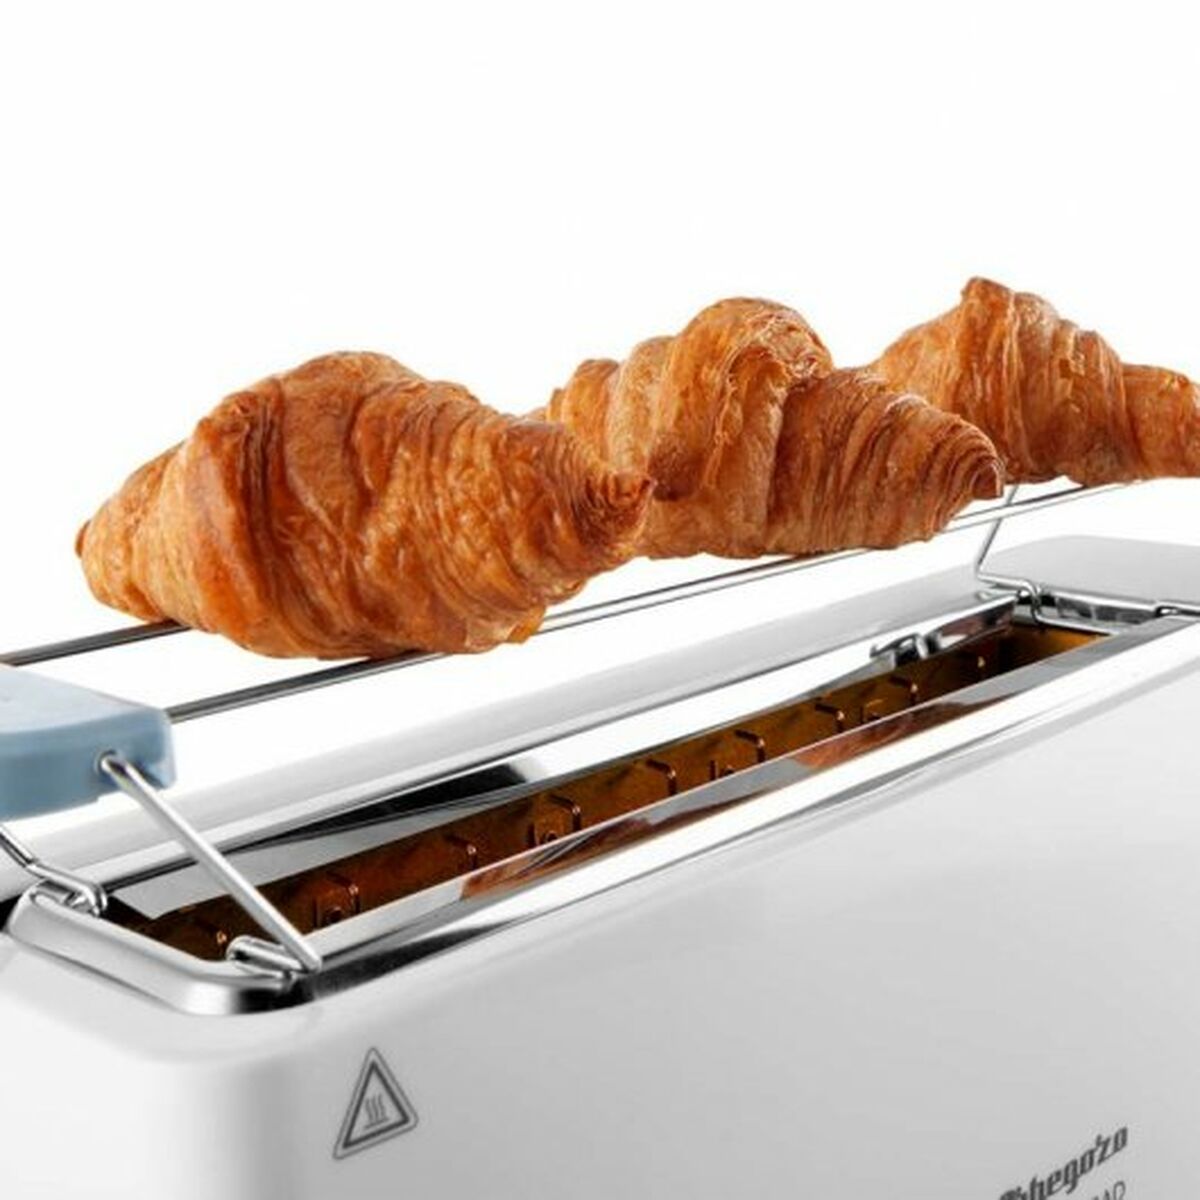 Toaster Orbegozo TO 4014 850 W - CA International 